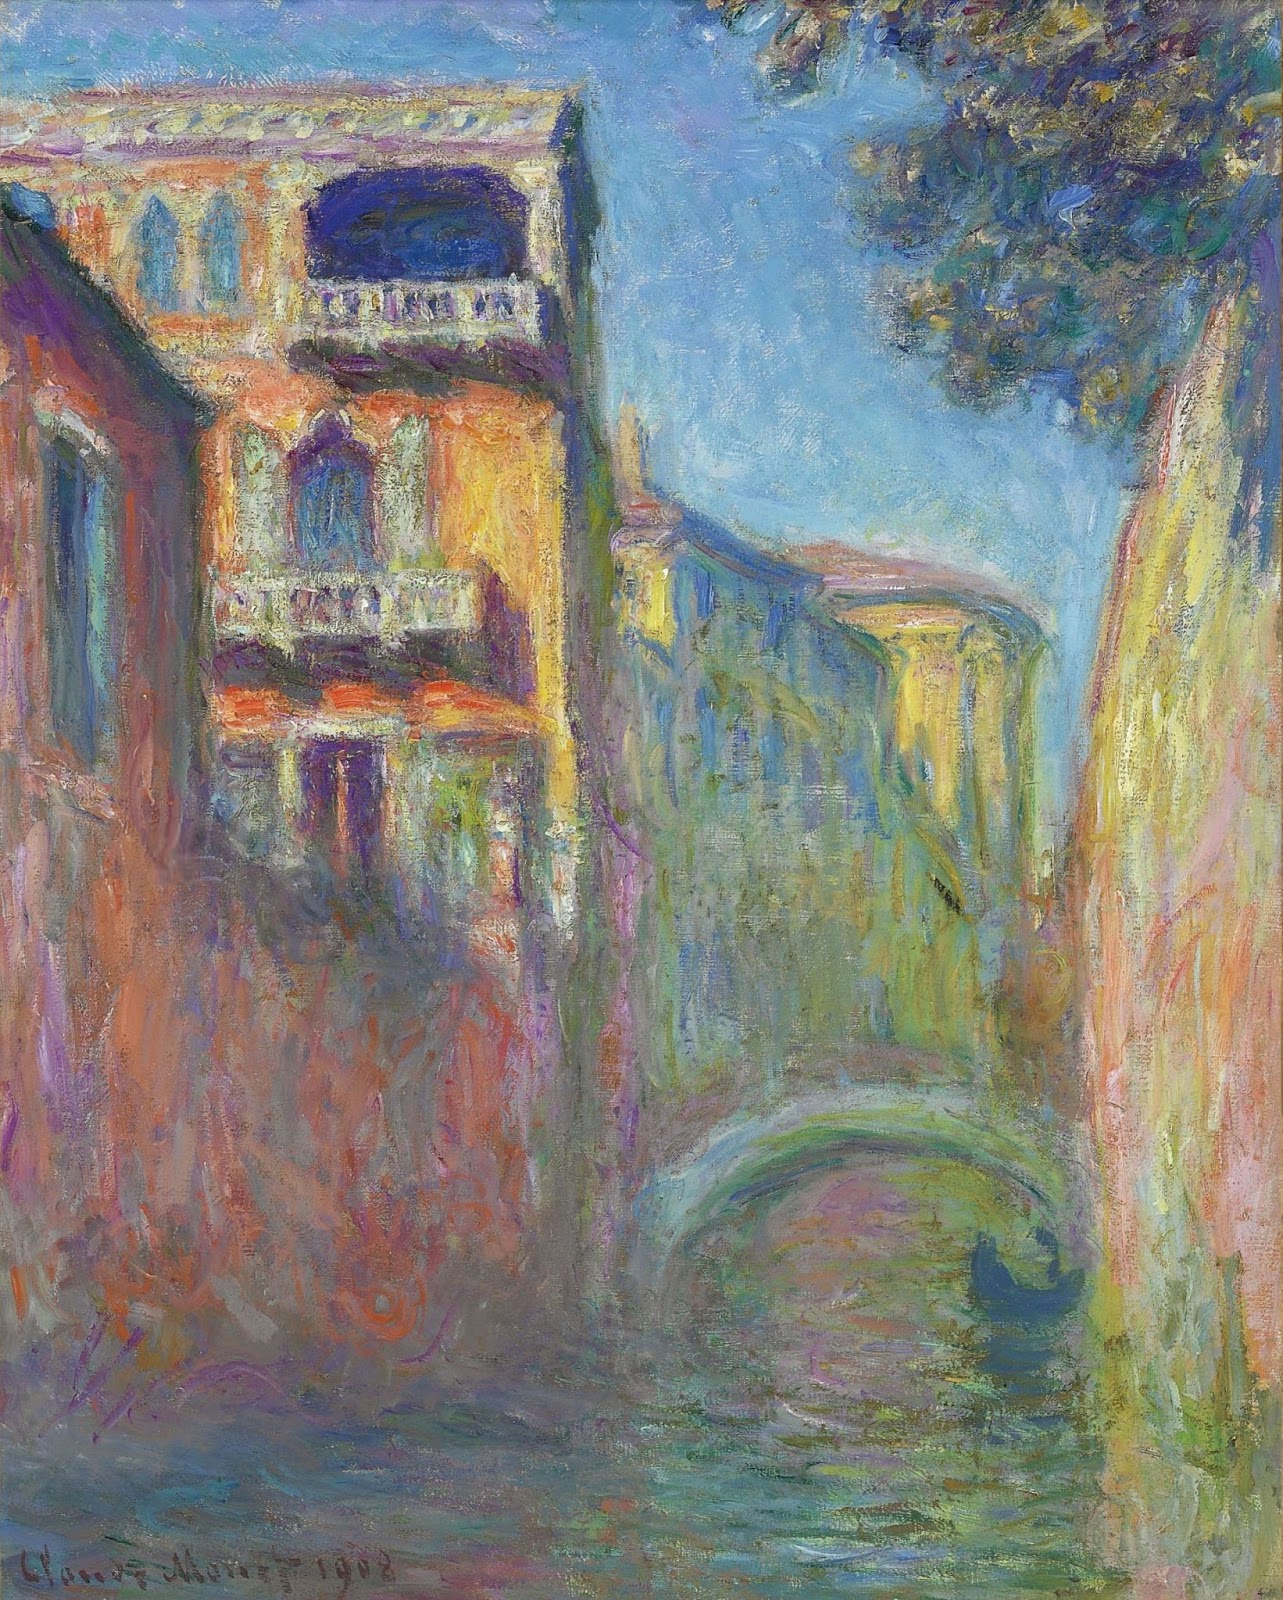 Claude+Monet-1840-1926 (801).jpg